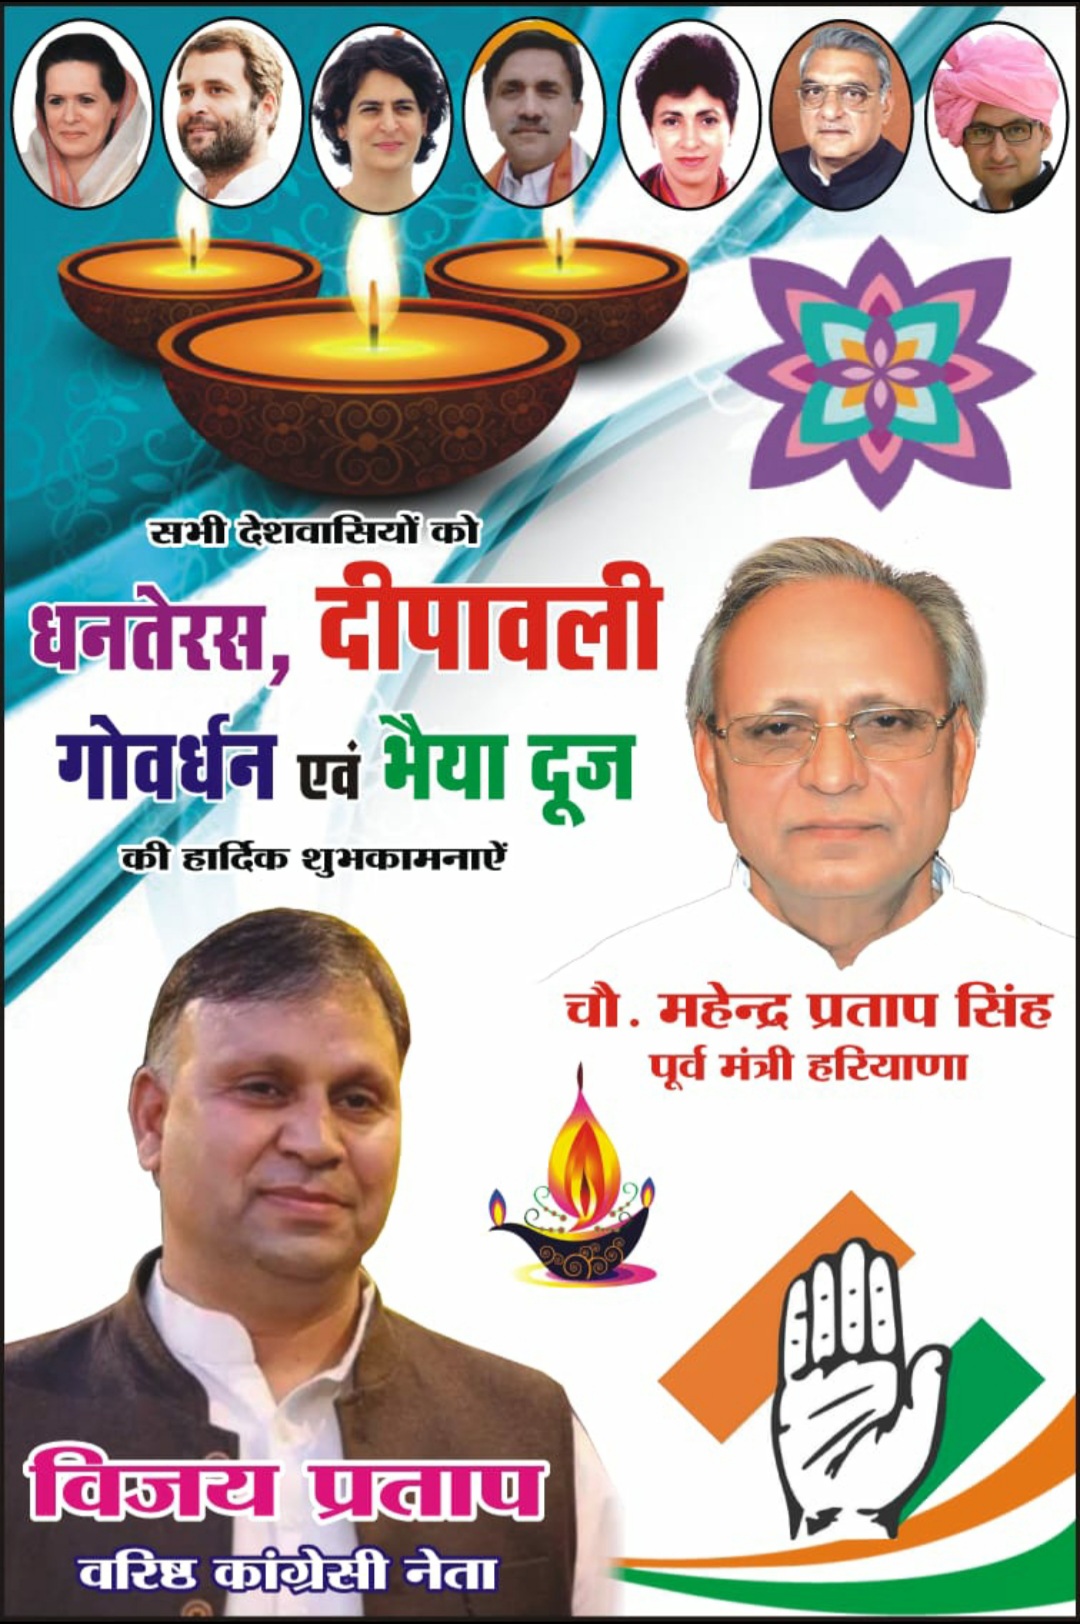 Happy diwali wish by vijay Partap